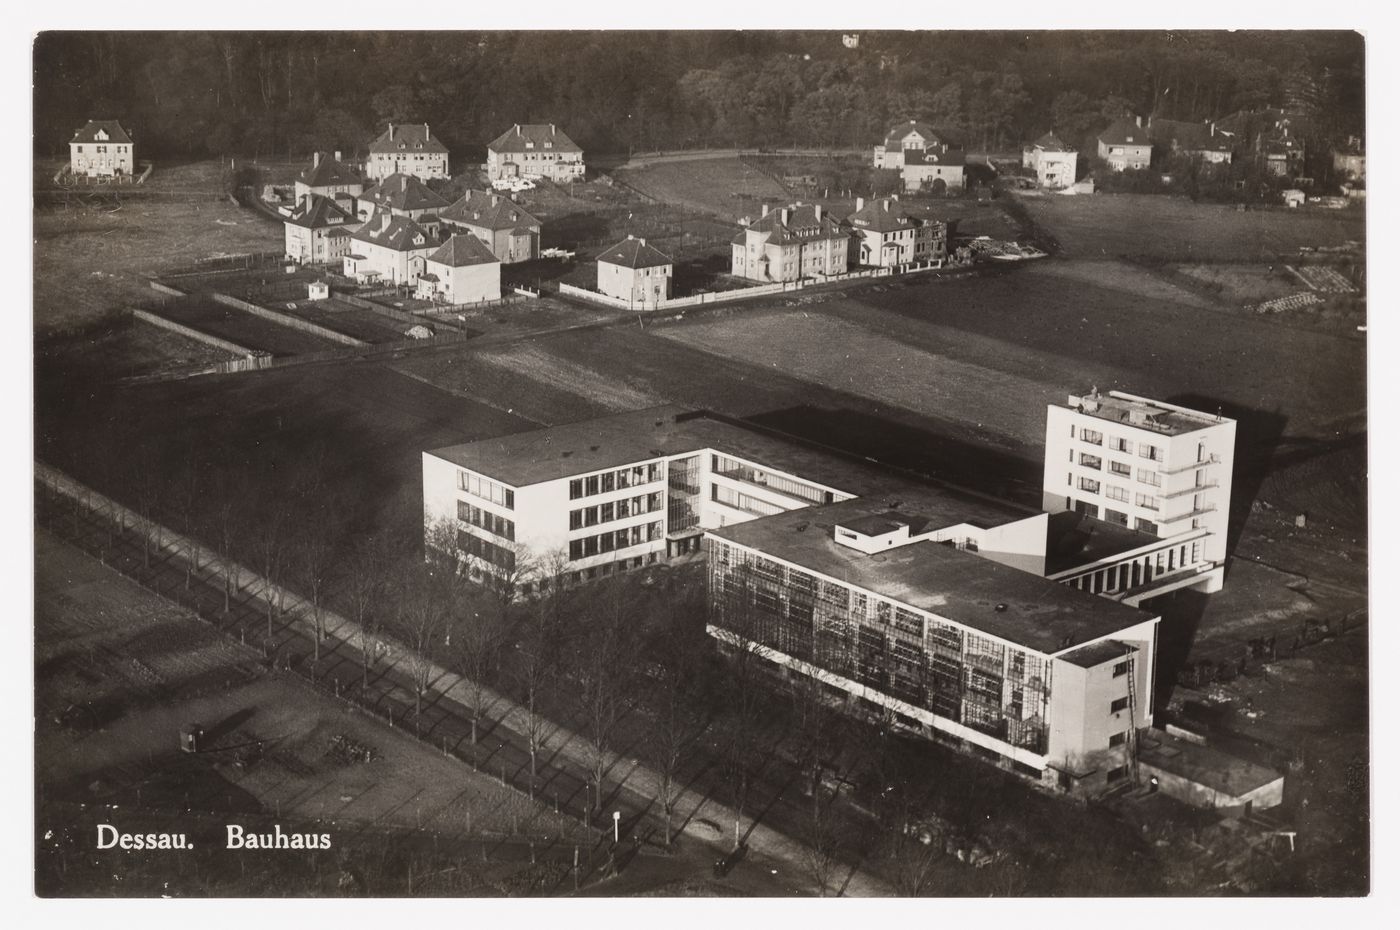 Aerial view of the Bauhaus building, Dessau, Germany